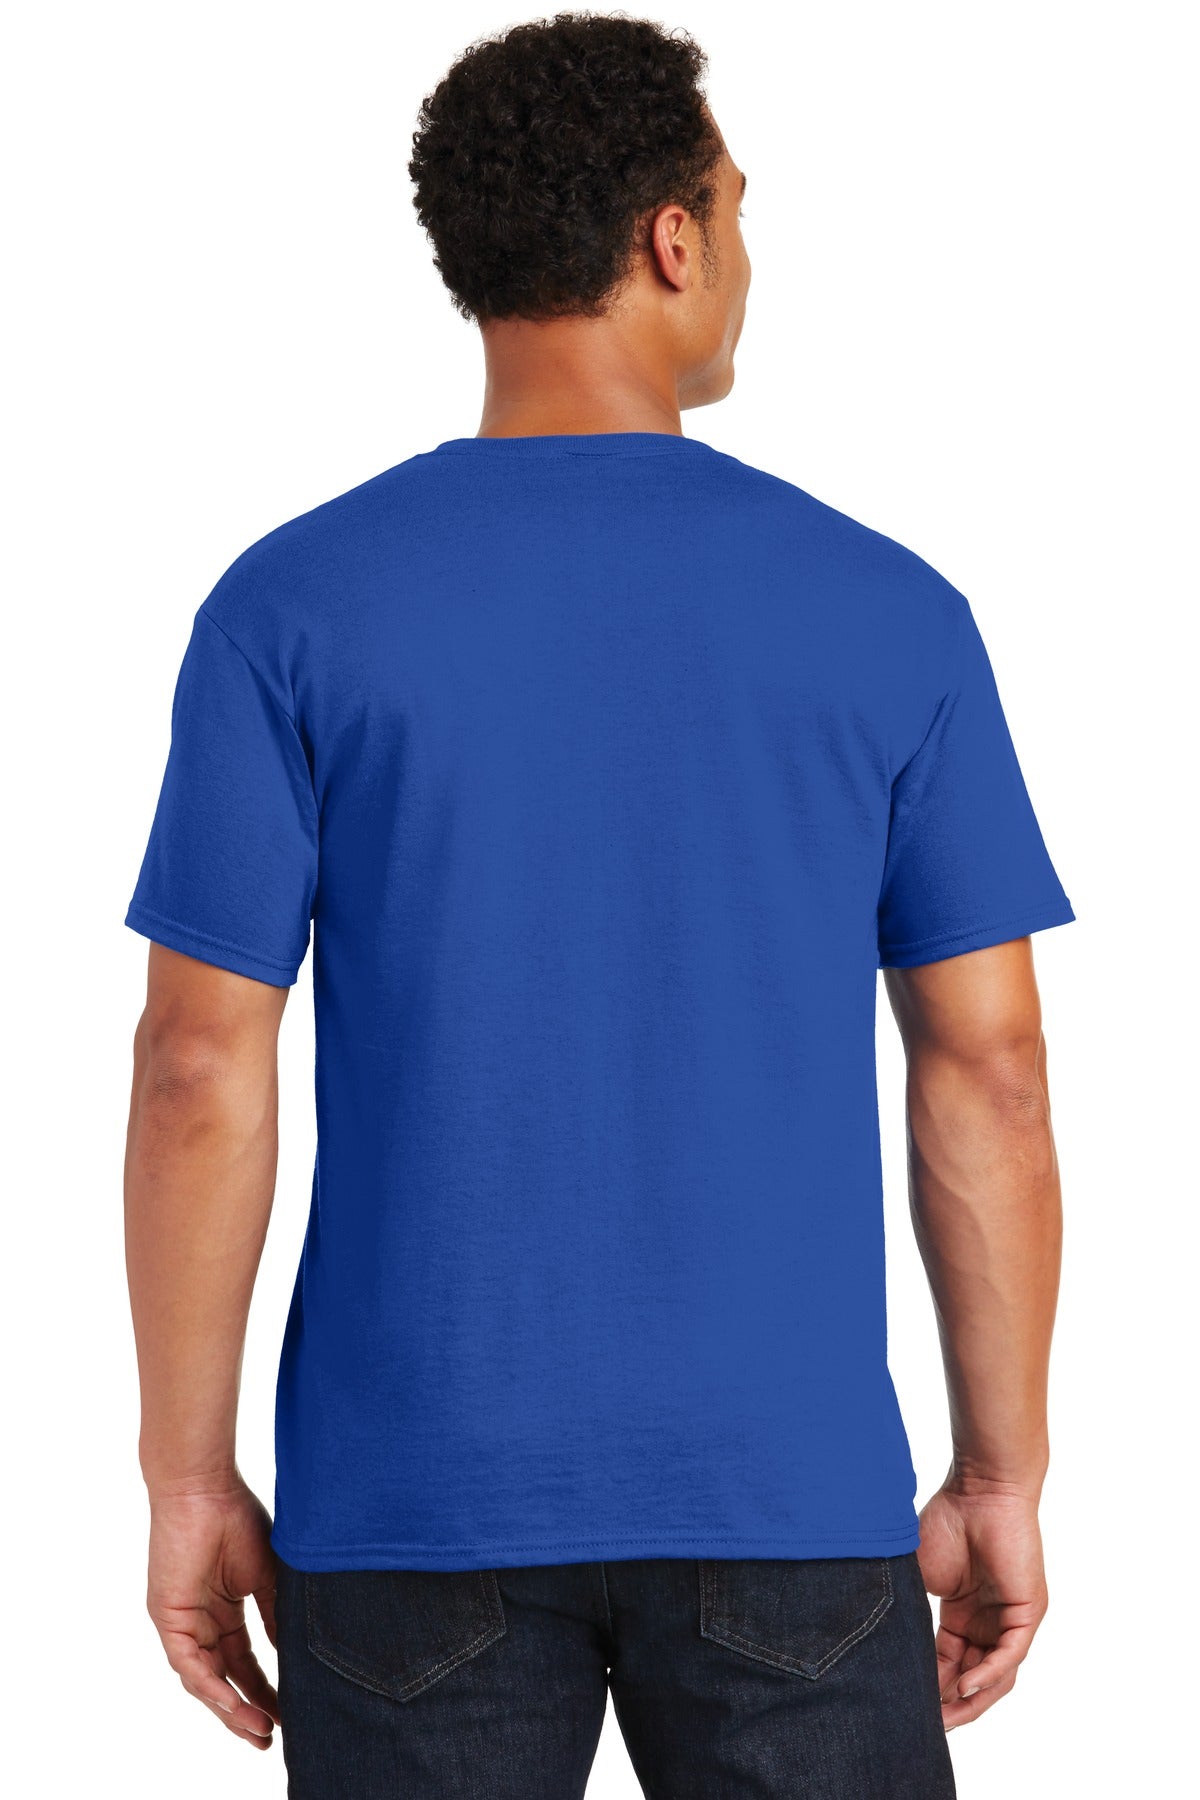 JERZEES® - Dri-Power® 50/50 Cotton/Poly T-Shirt. 29M [Royal] - DFW Impression